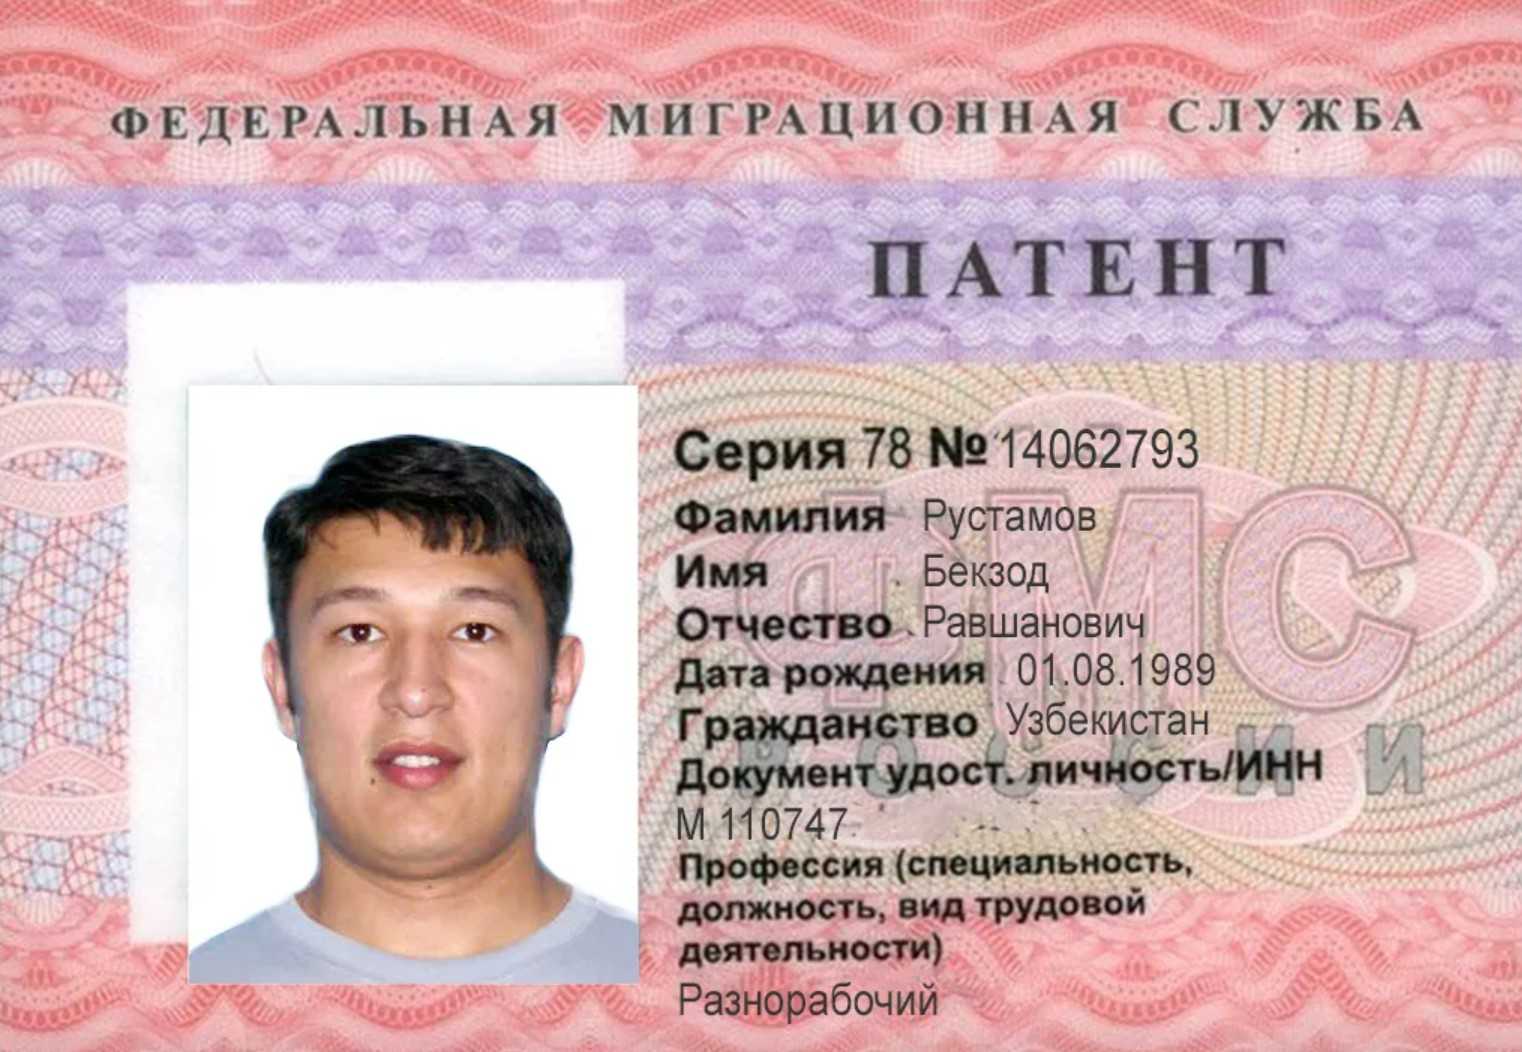 Узбекистан нужен патент